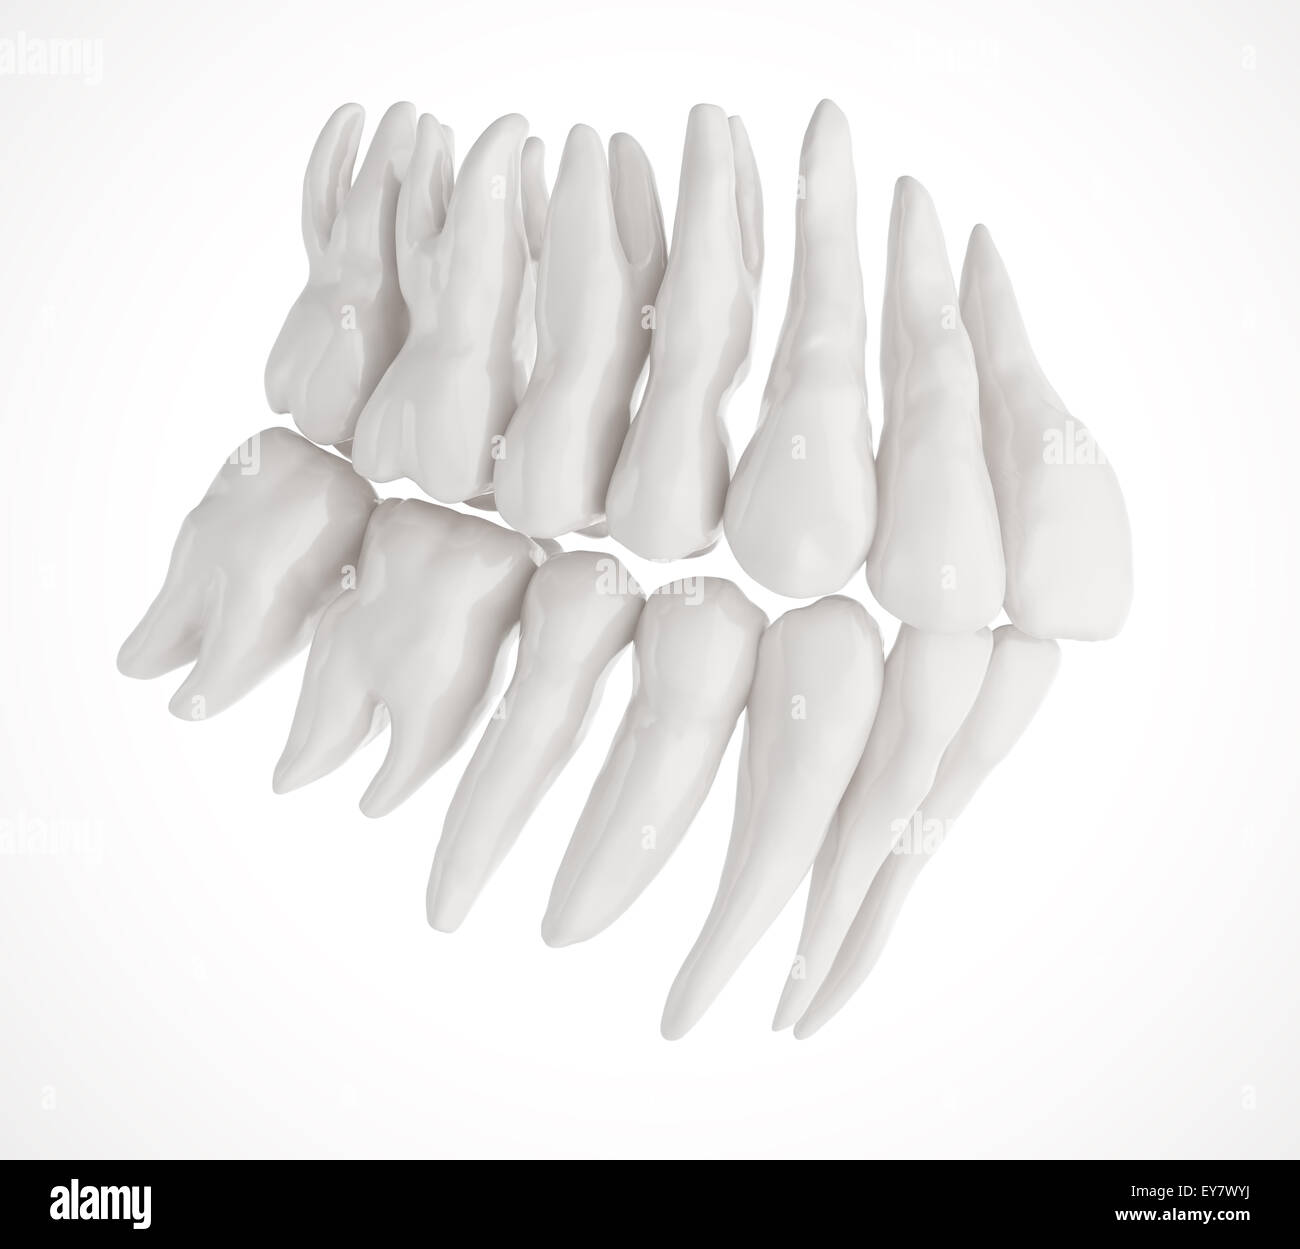 Medical illustration of human teeth Stock Photo